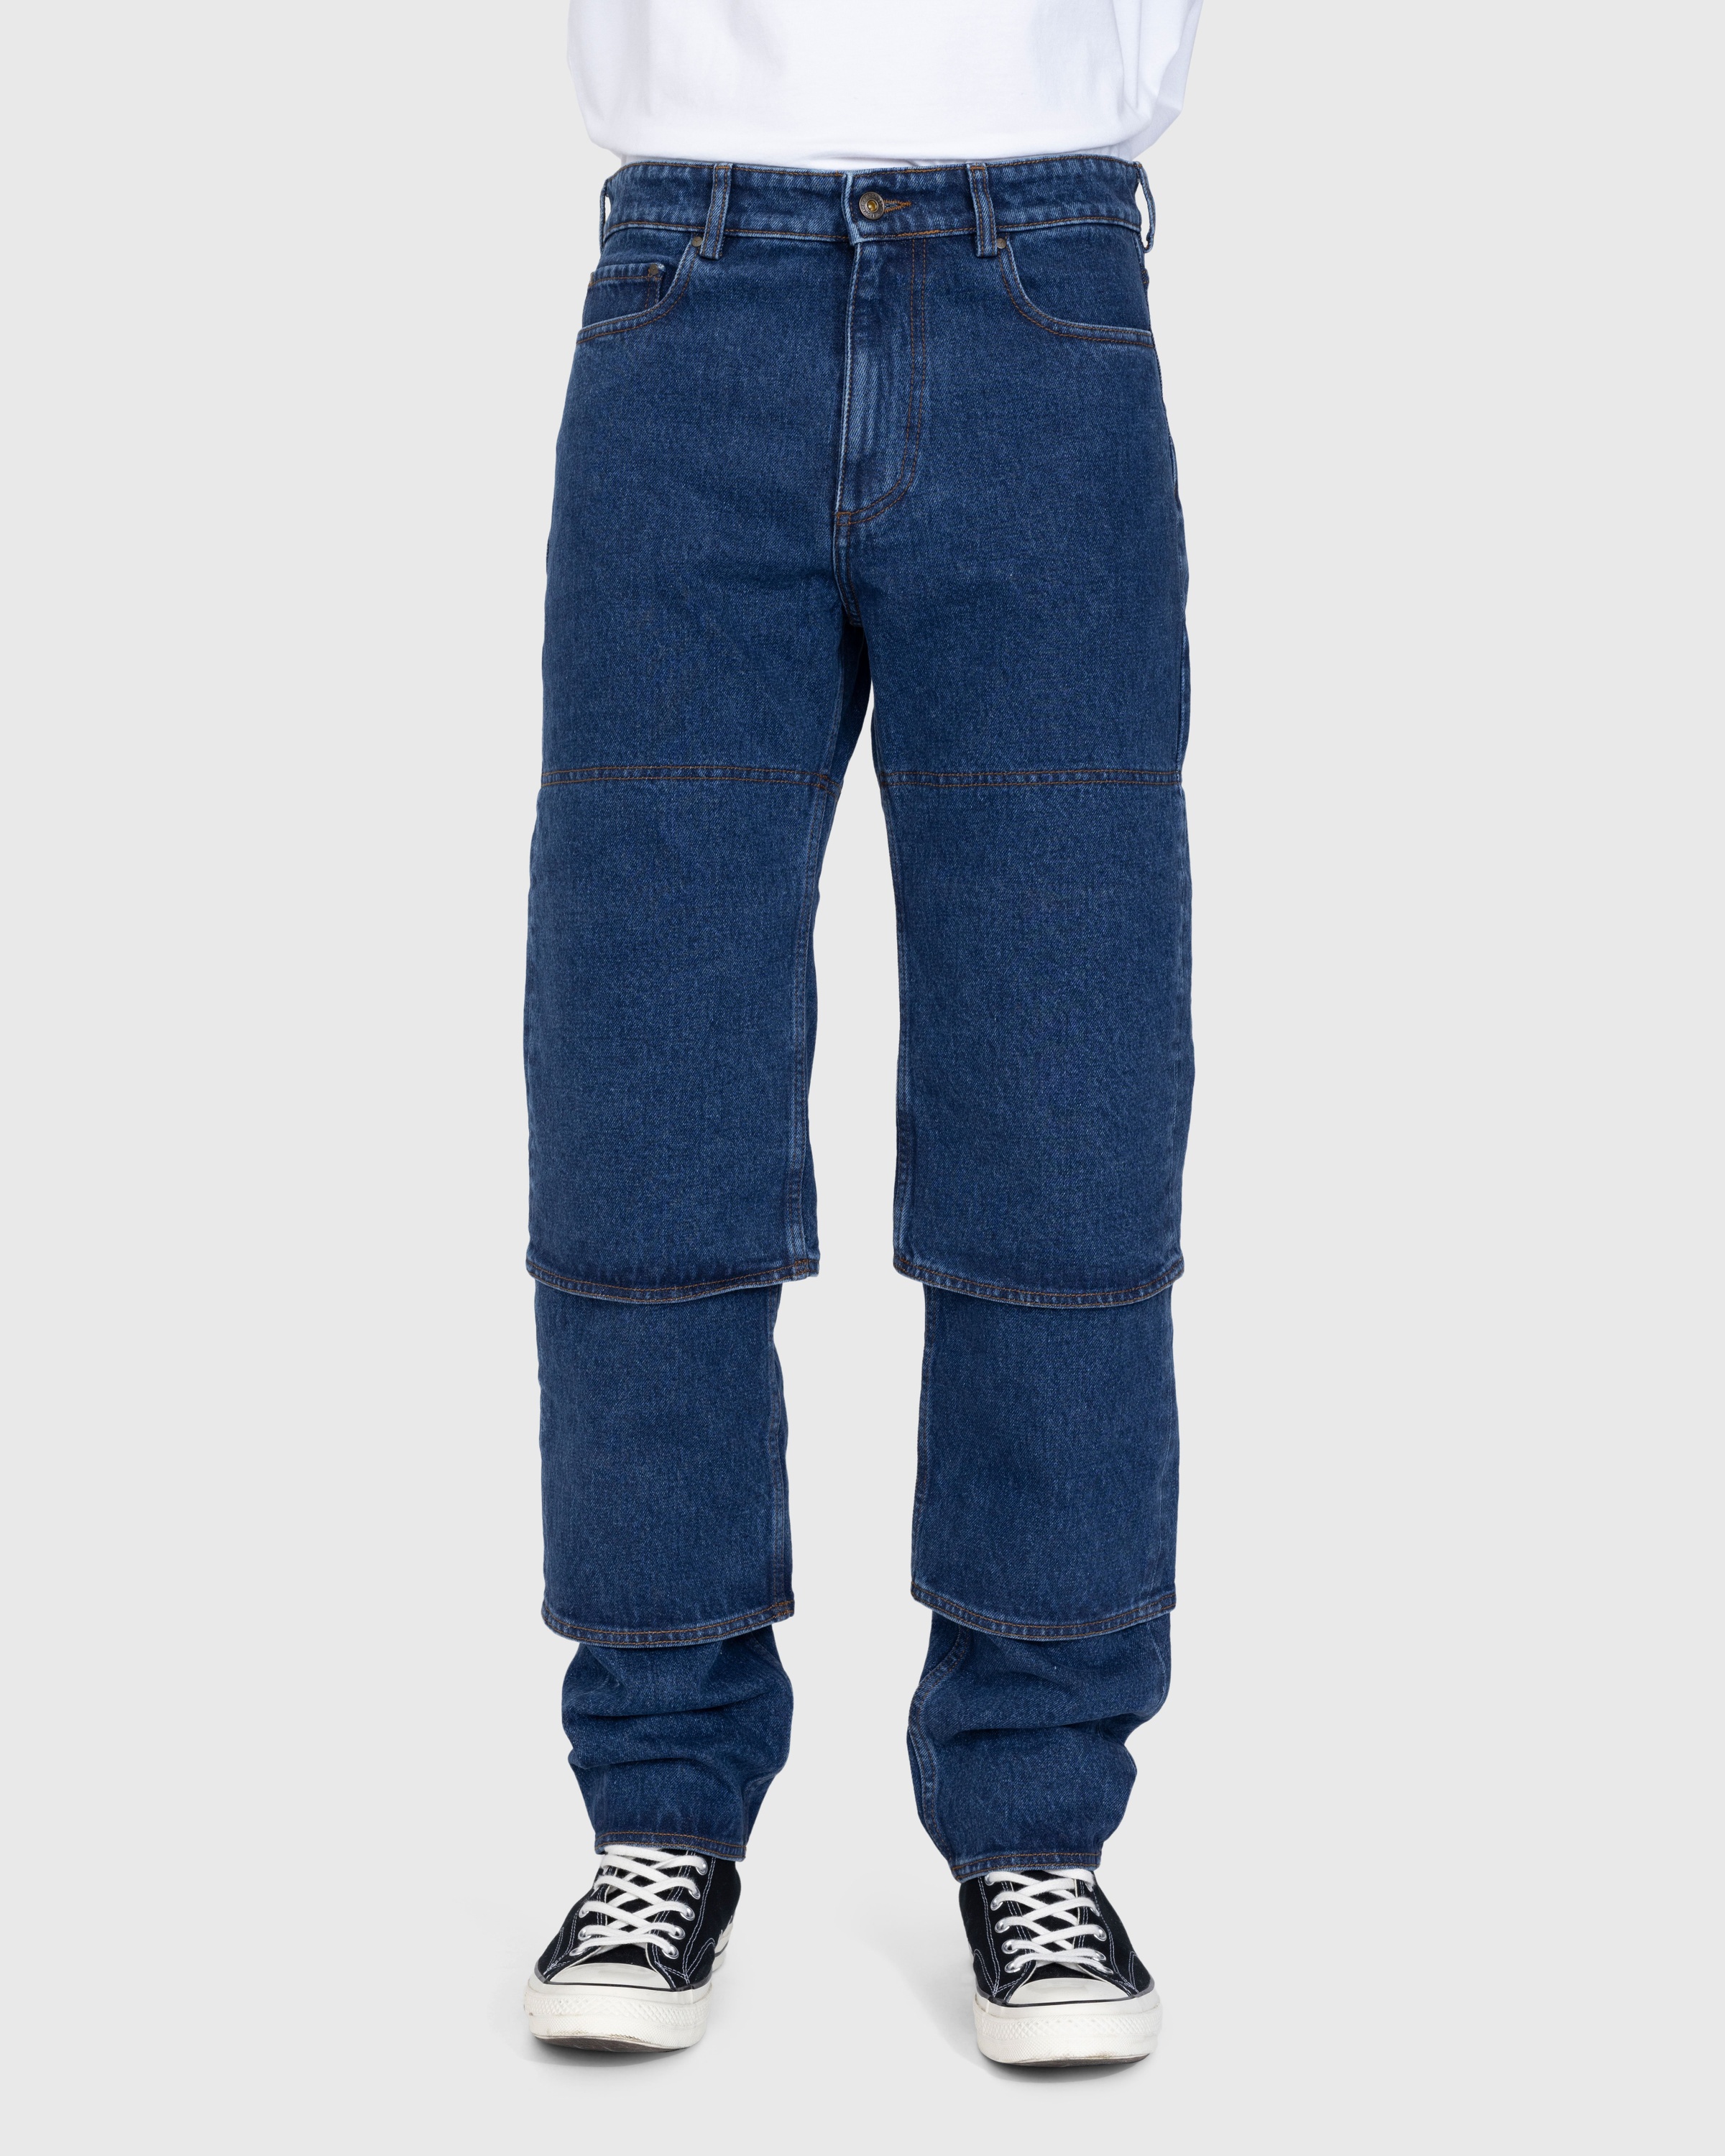 Y/Project – Classic Multi-Cuff Jeans Blue - Denim - Blue - Image 2